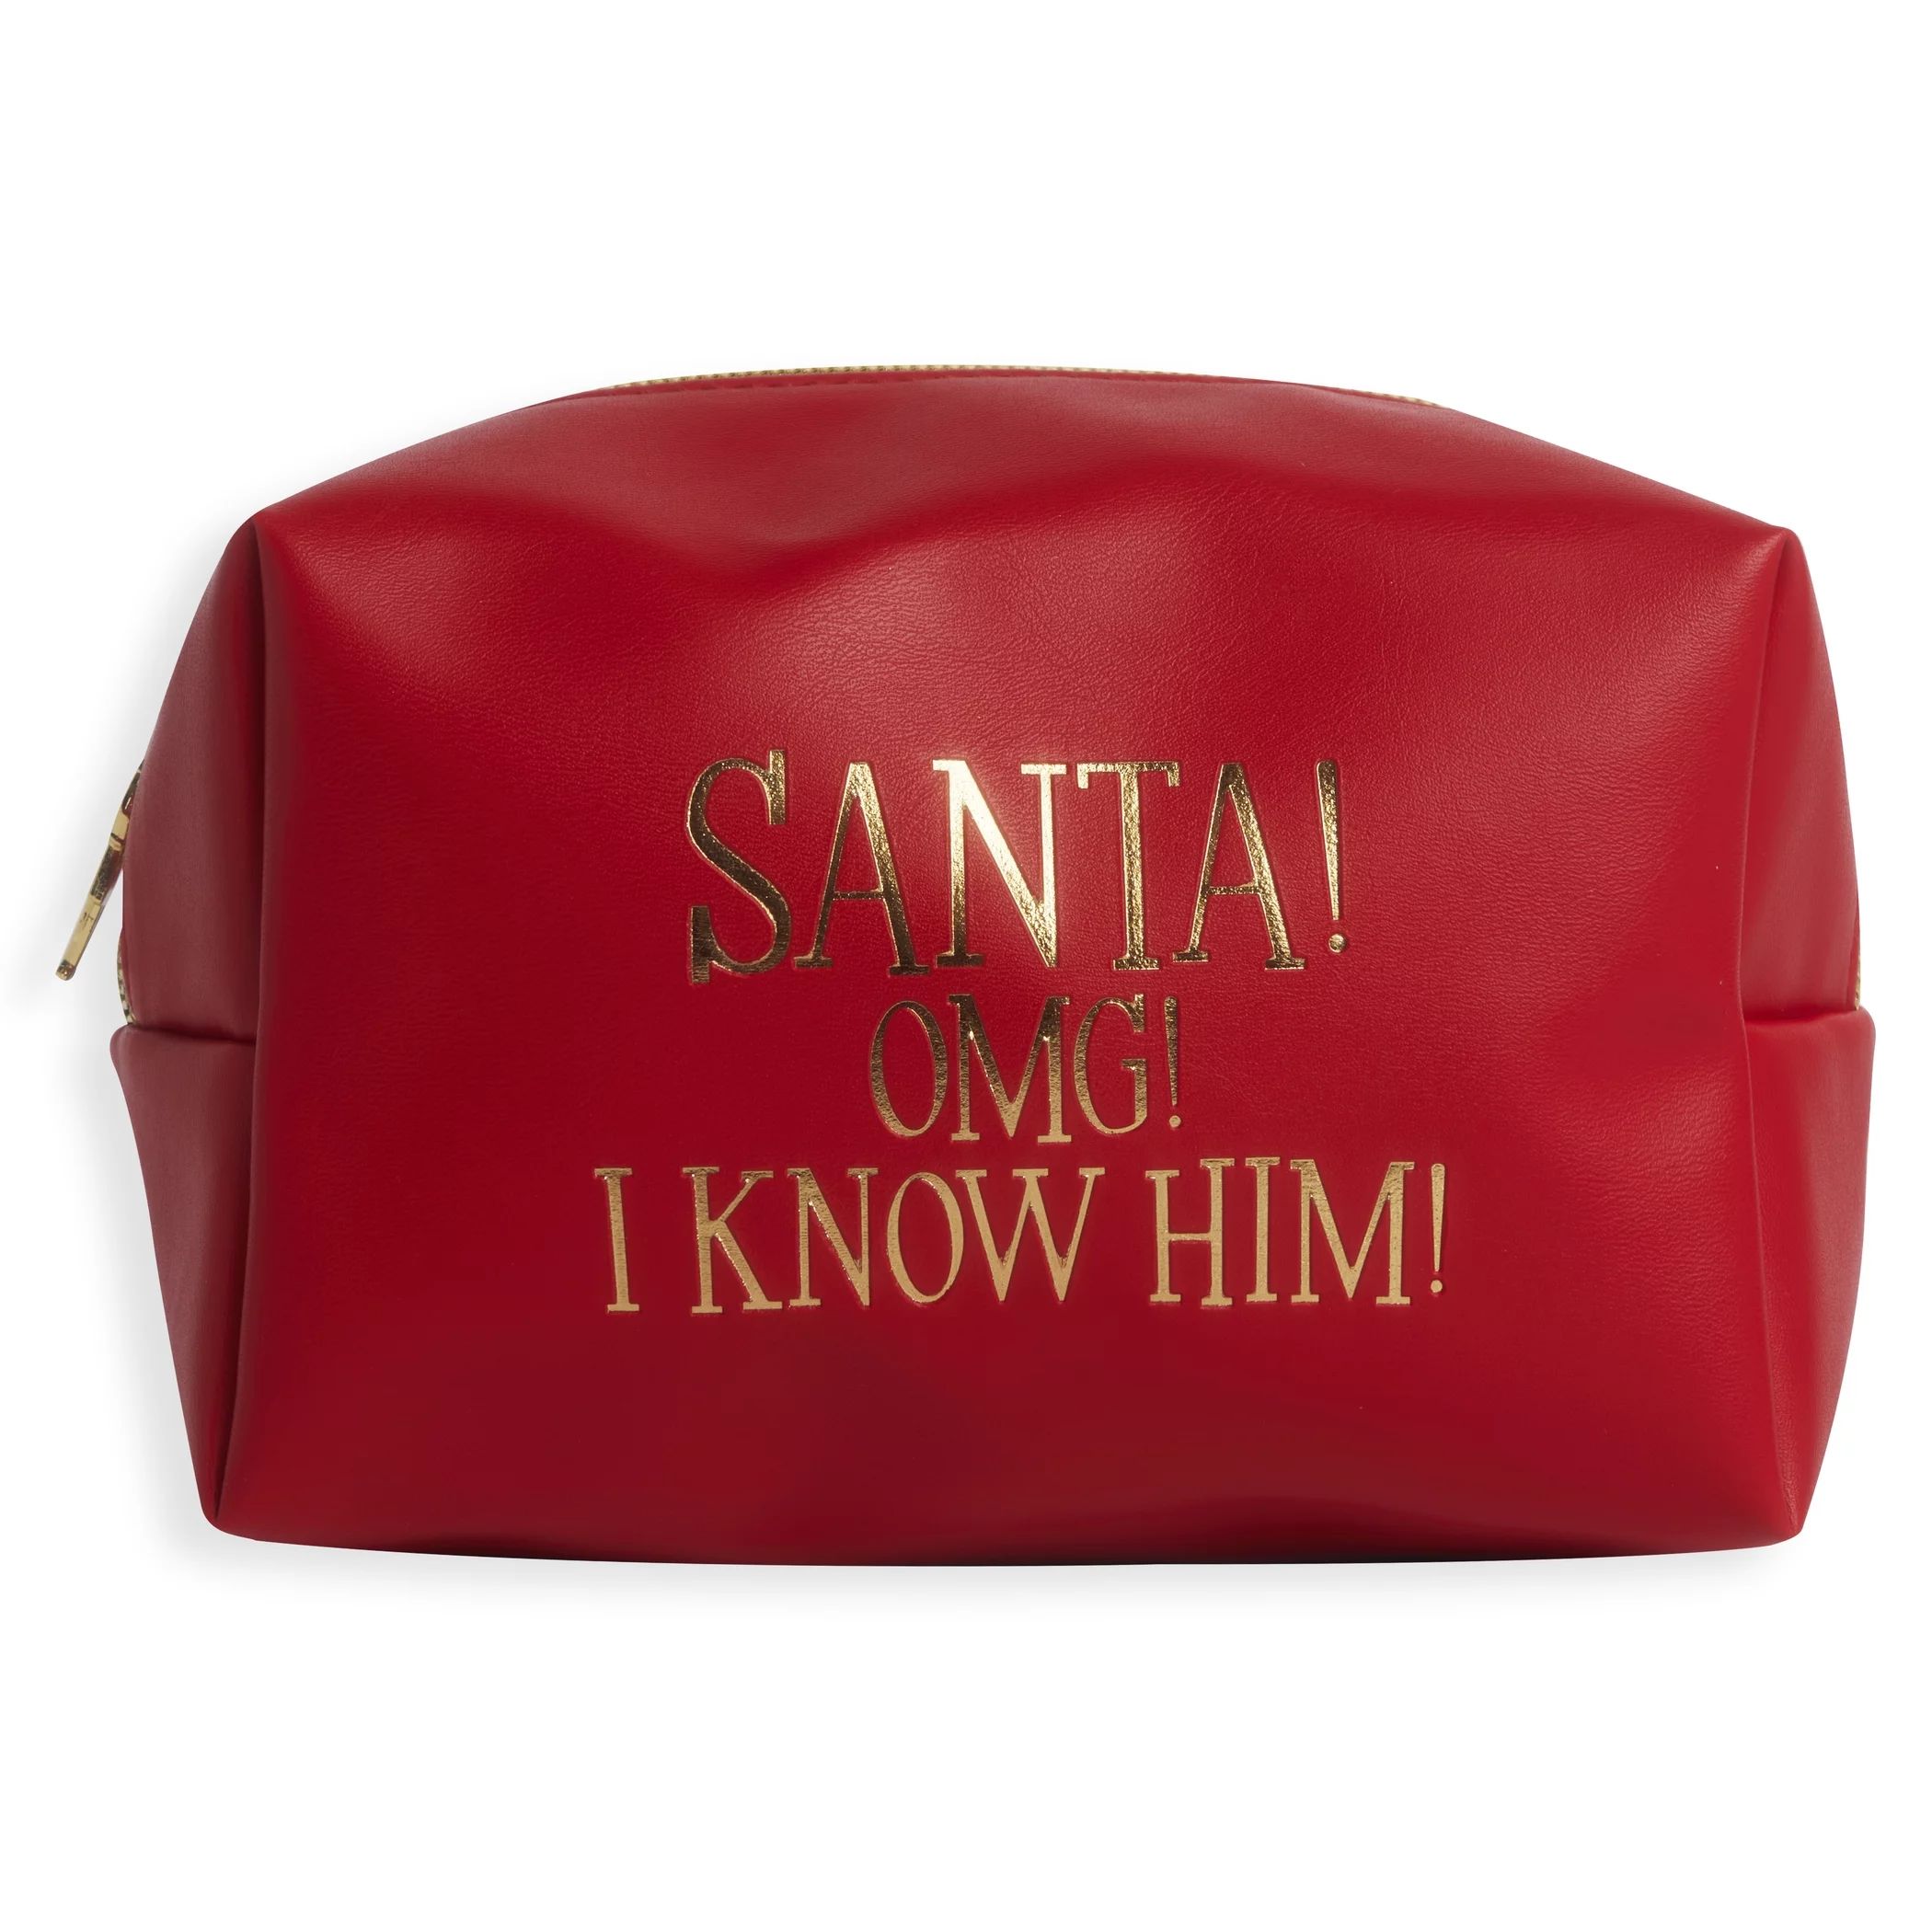 Elf™ x Revolution "SANTA! OMG! I KNOW HIM!" Red Makeup Bag | Walmart (US)